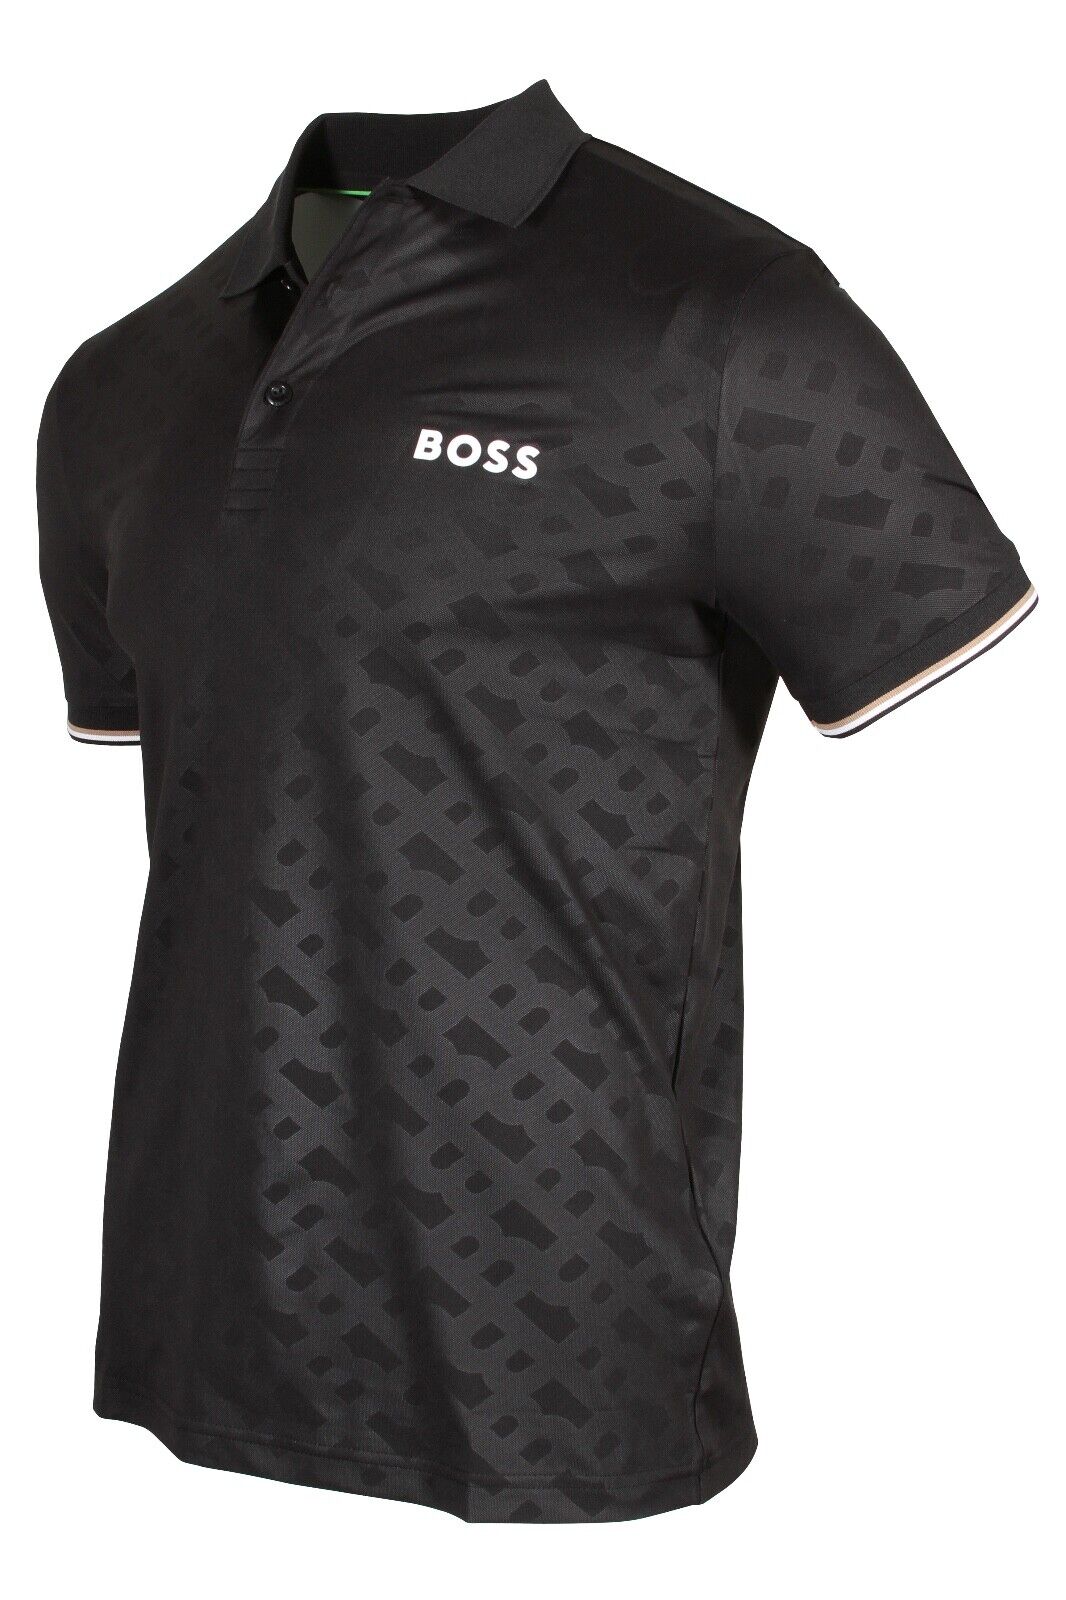 HUGO BOSS X Matteo Berrettini Men’s Slim-Fit Polo Shirt in Black 50501282 001